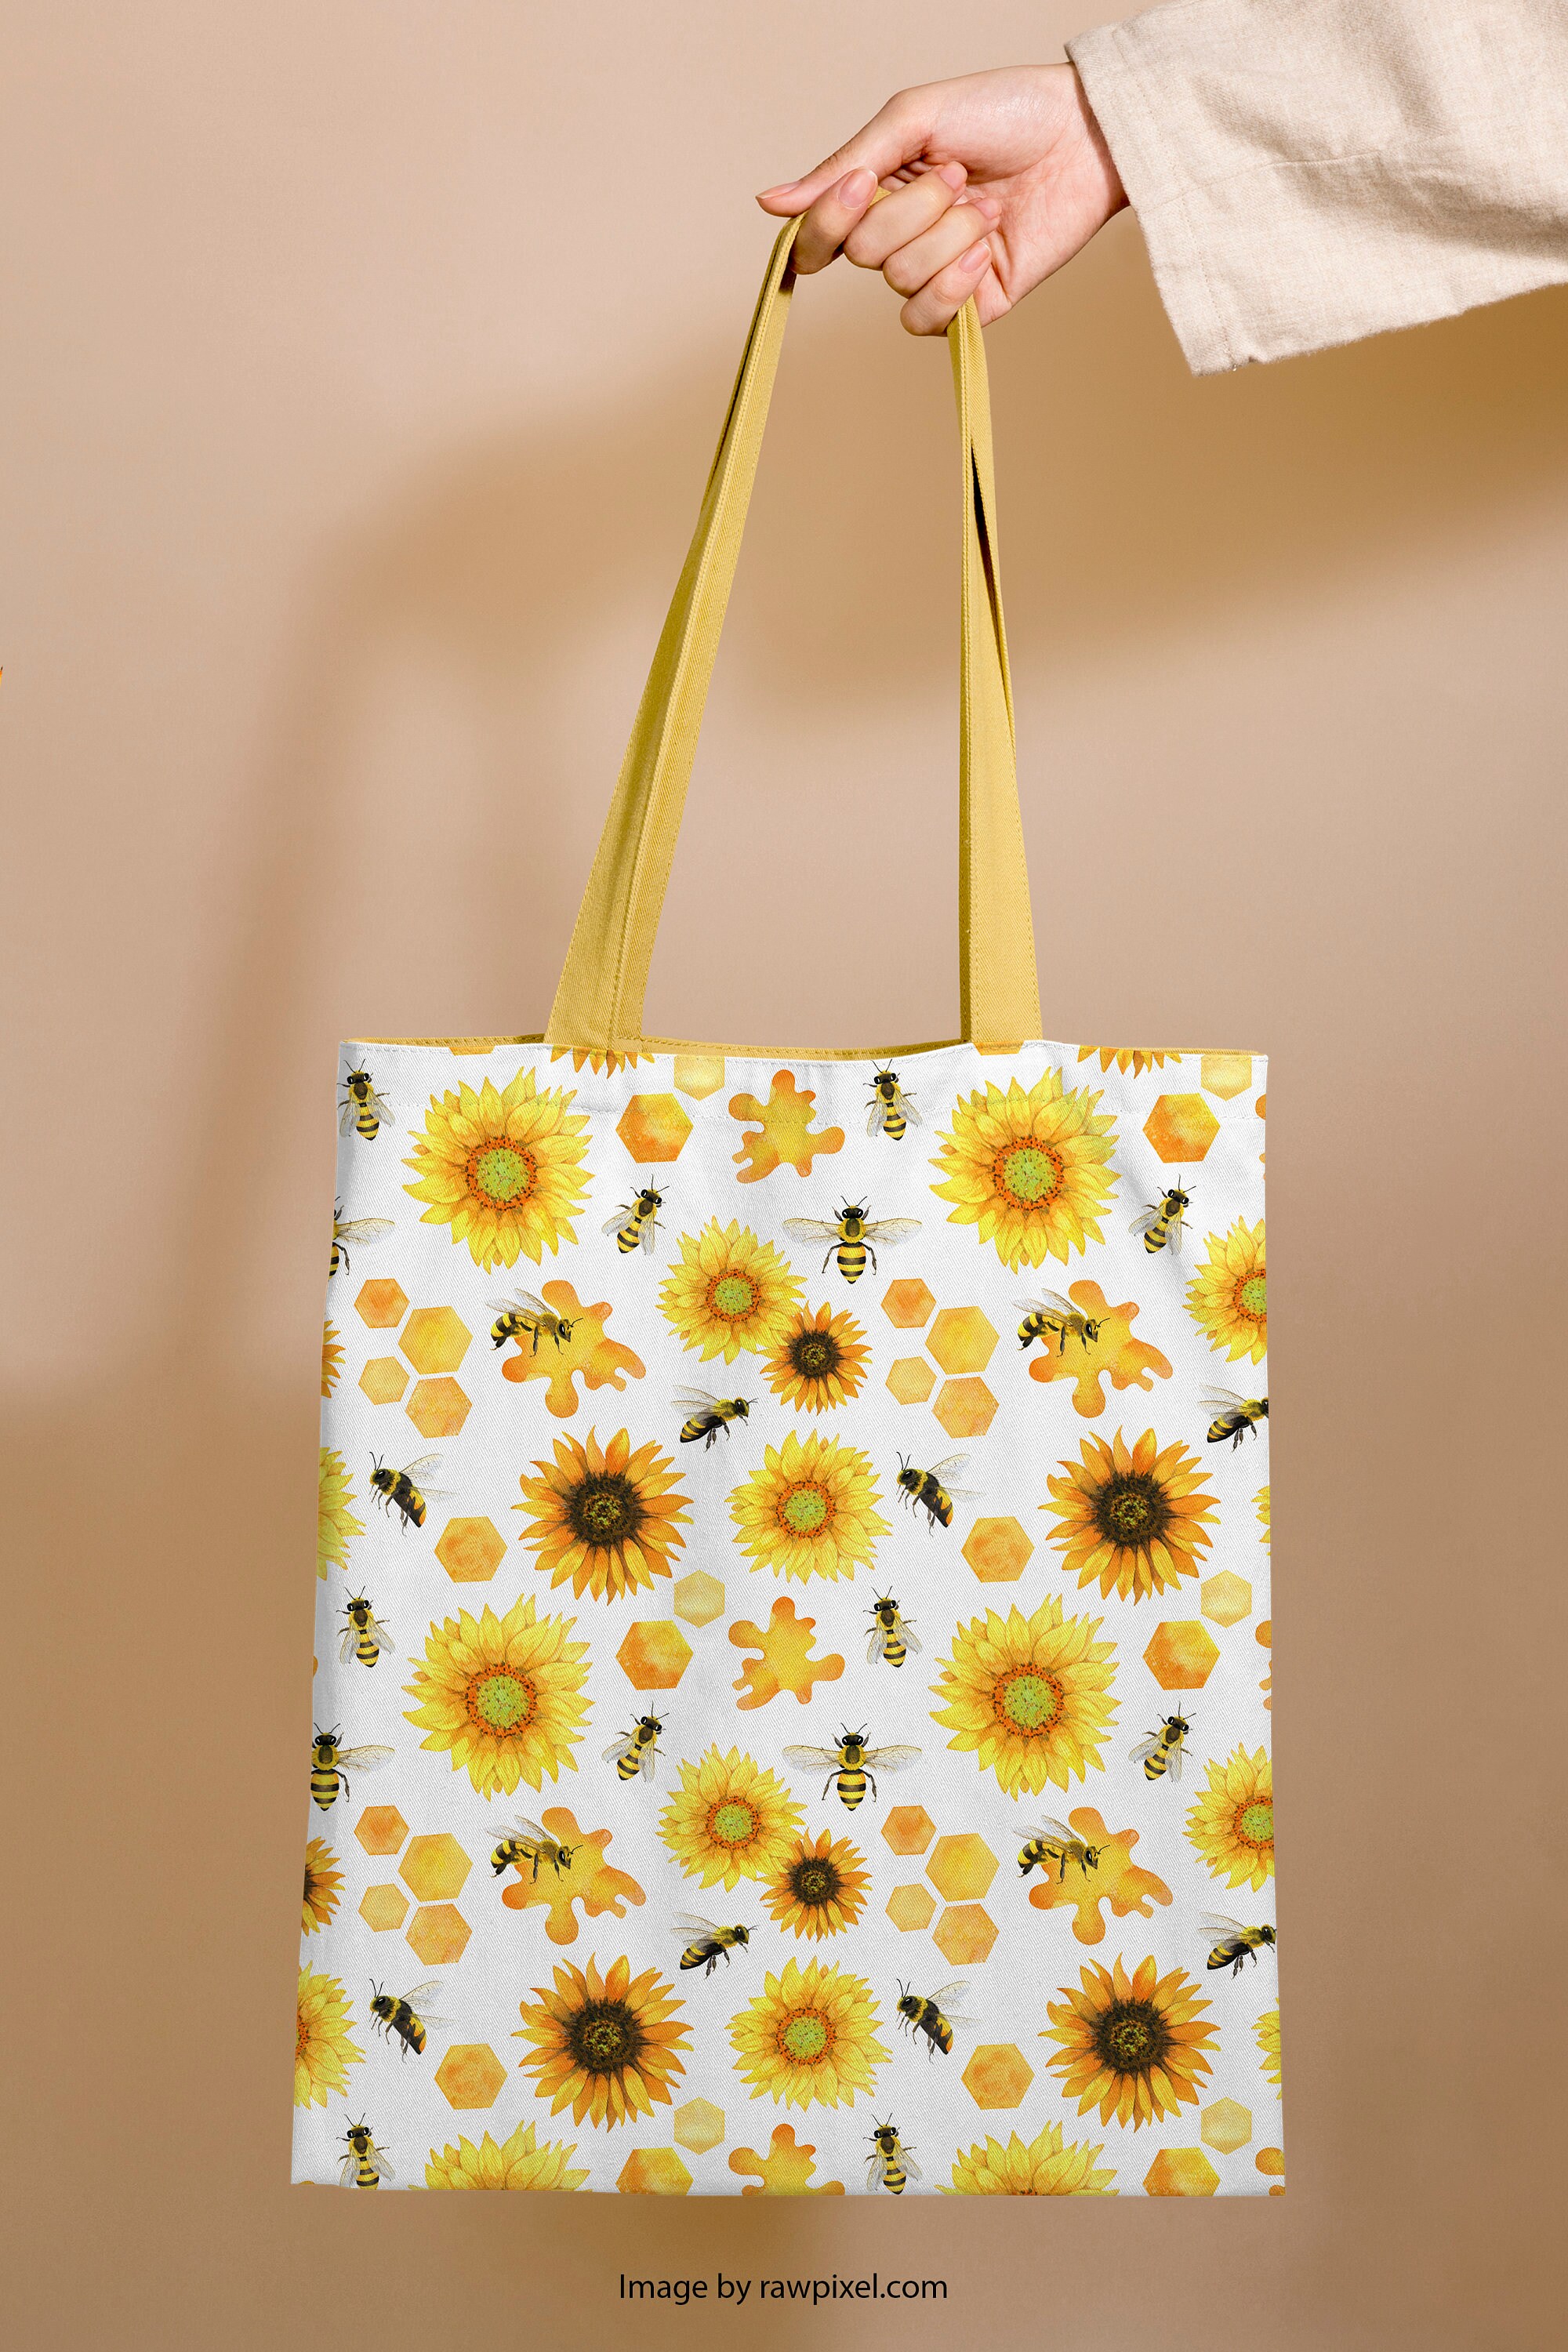 Sunflowers & Honey Bee Digital Paper Repeat Seamless Pattern - Etsy